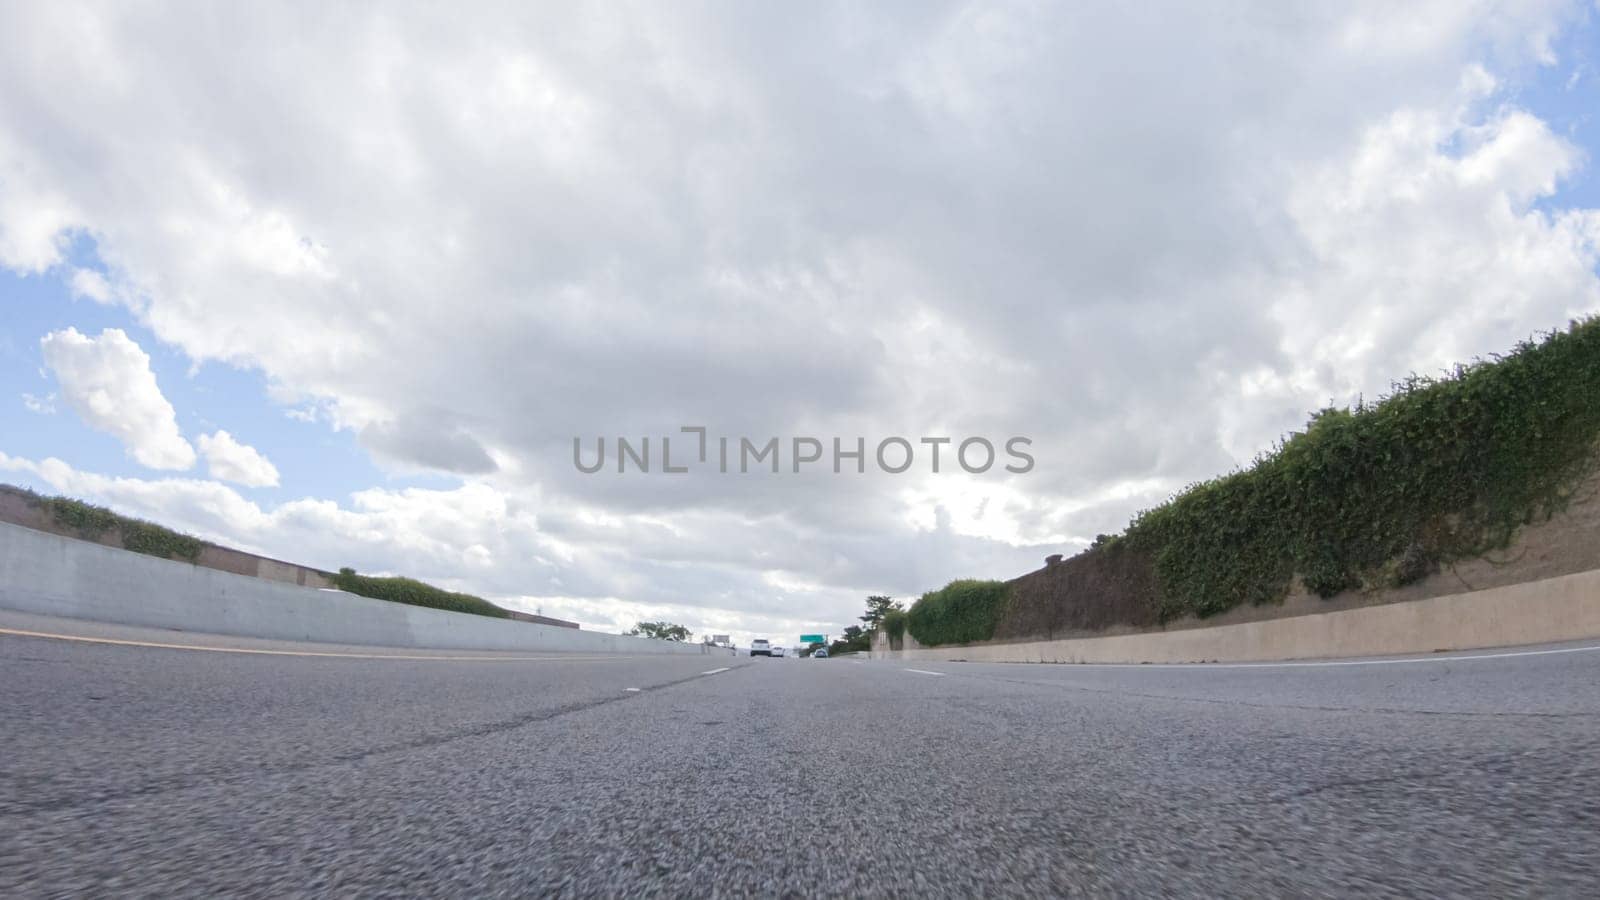 Winter Drive along Cloudy Highway 101 near Santa Maria by arinahabich